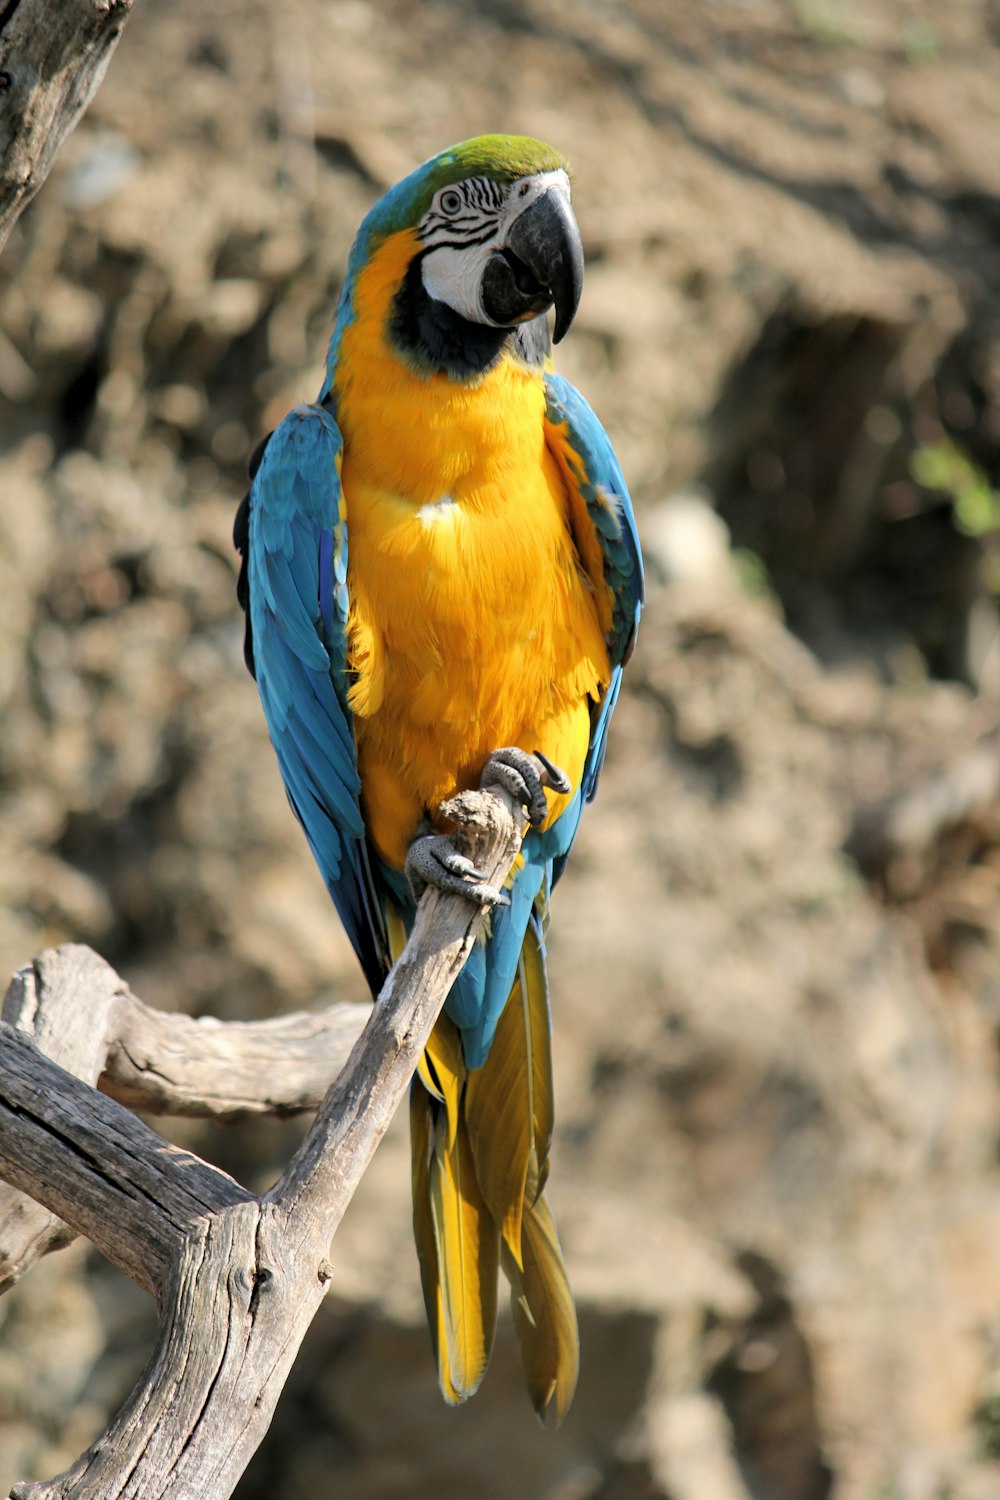 papagaio azul-e-amarelo empoleirado na árvore durante o dia